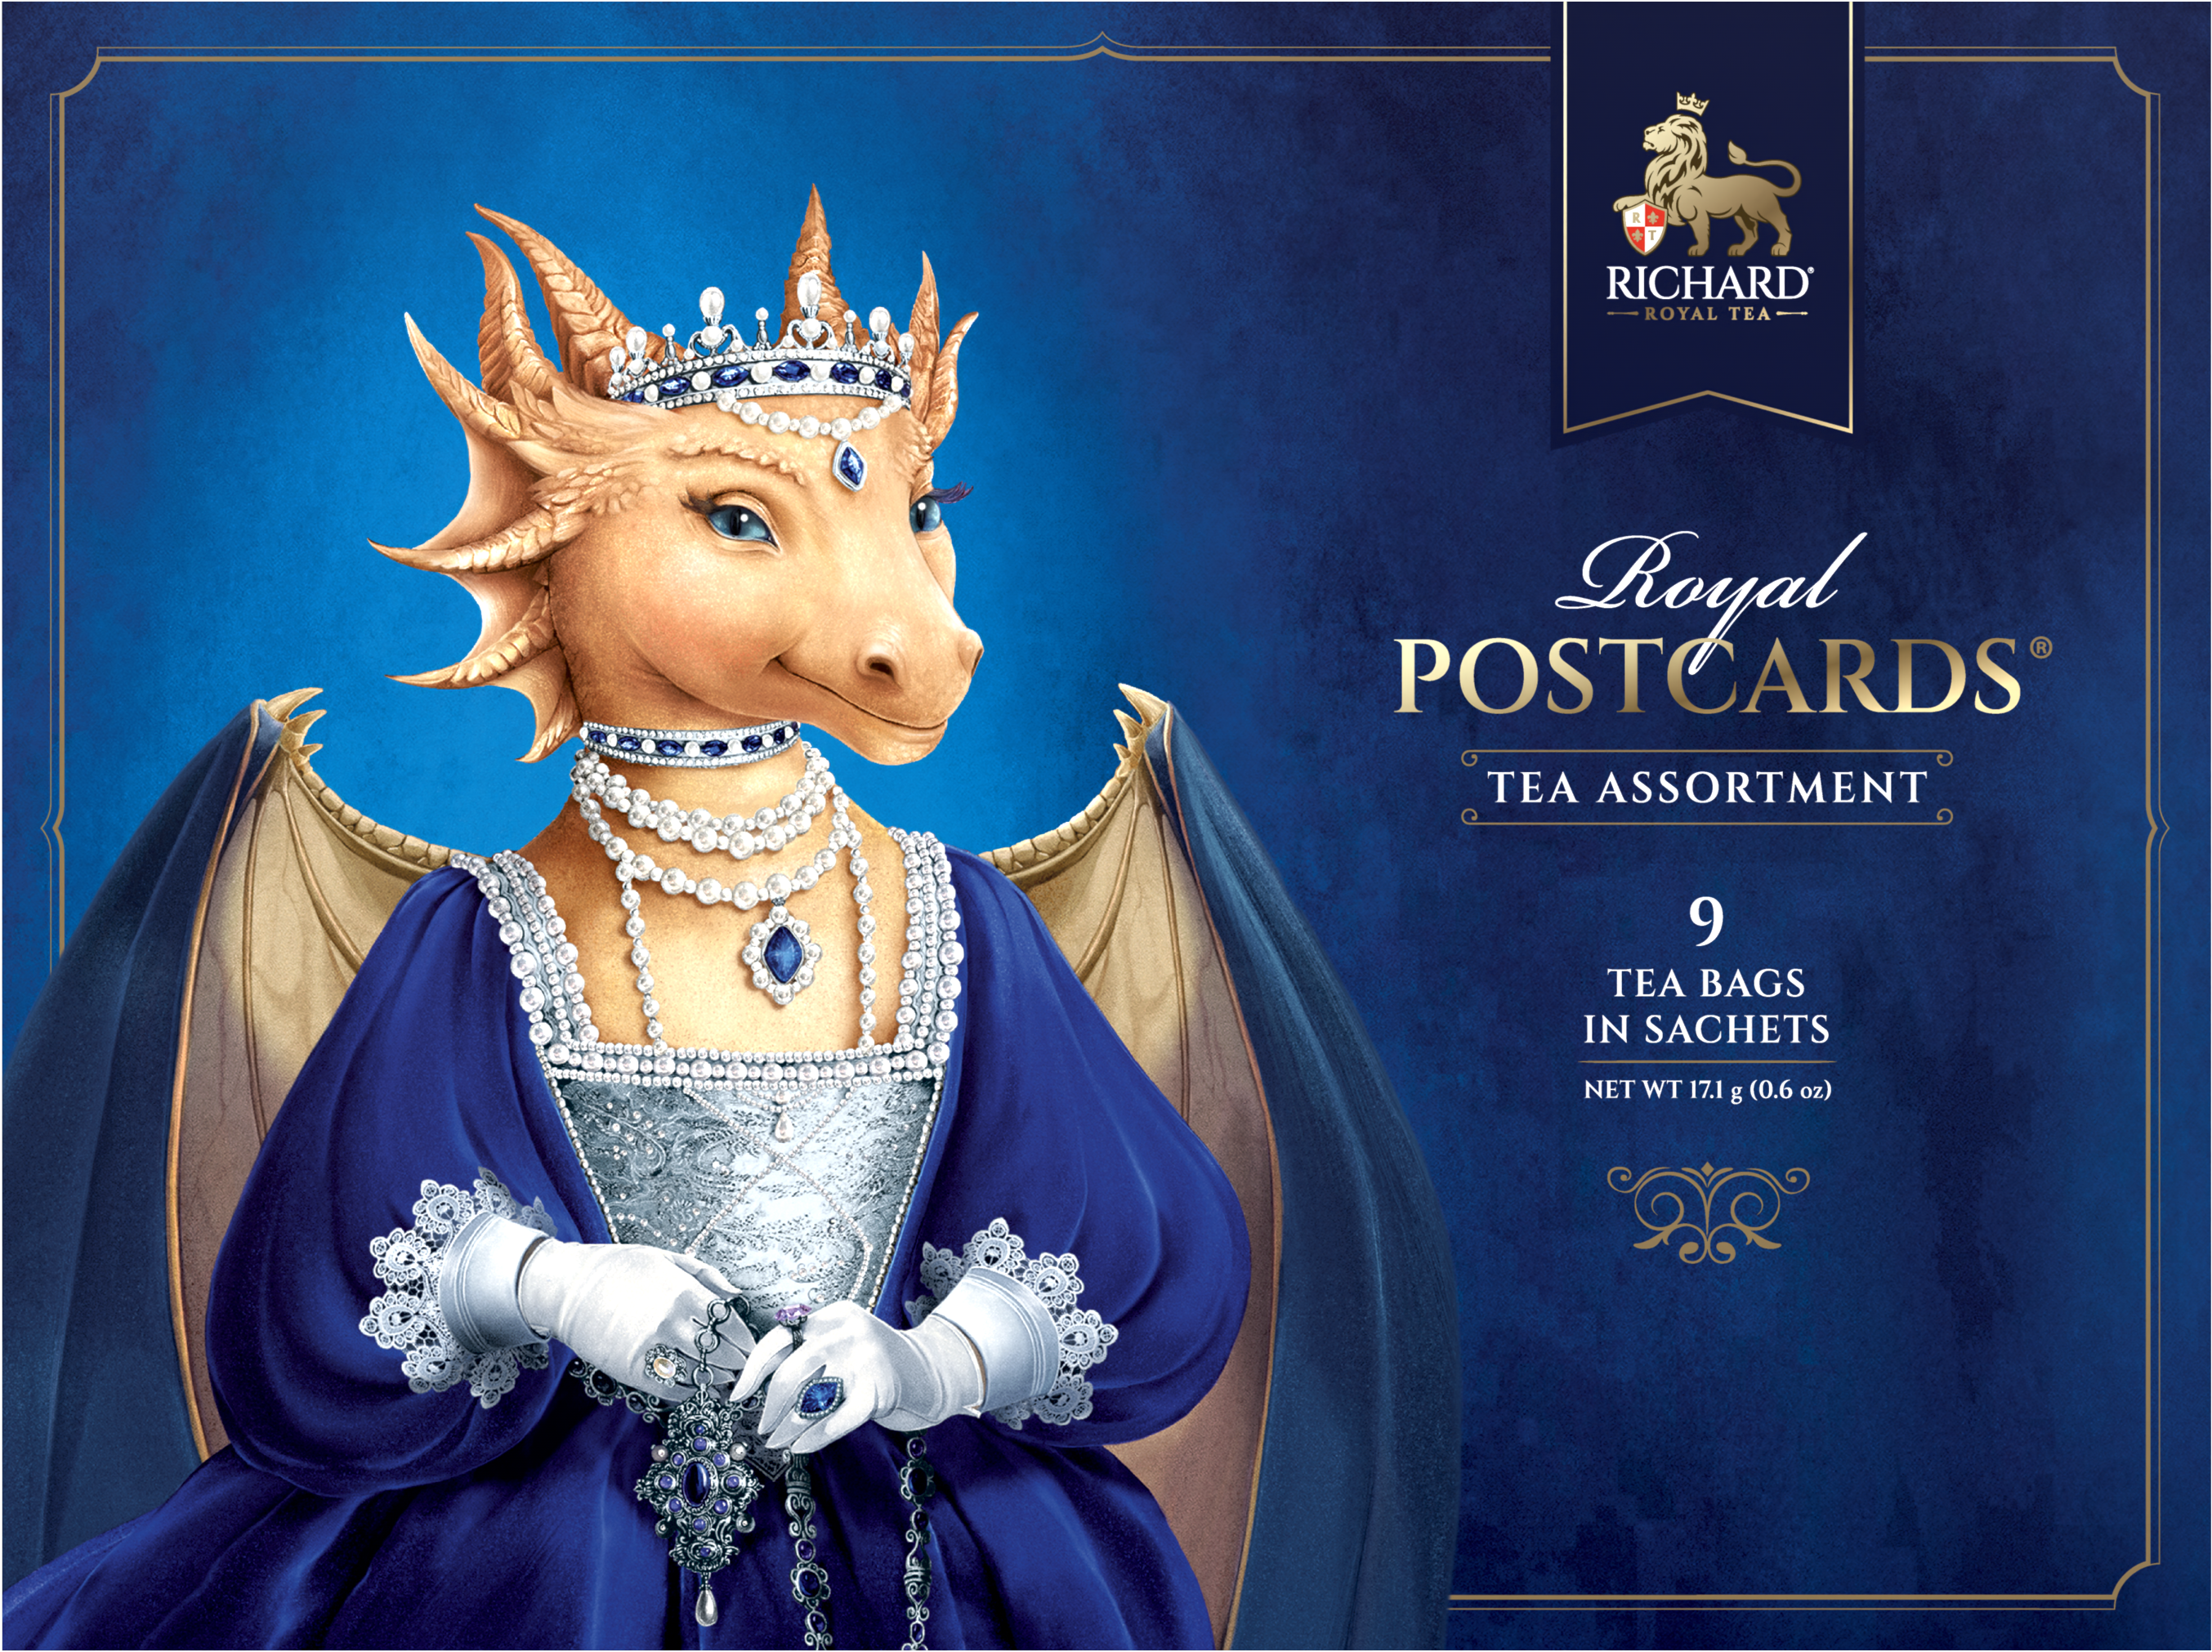 Royal Postcards Tea Assortment, Year of the Royal Dragon Queen, assorted tea - 9 sachets Richard Tea